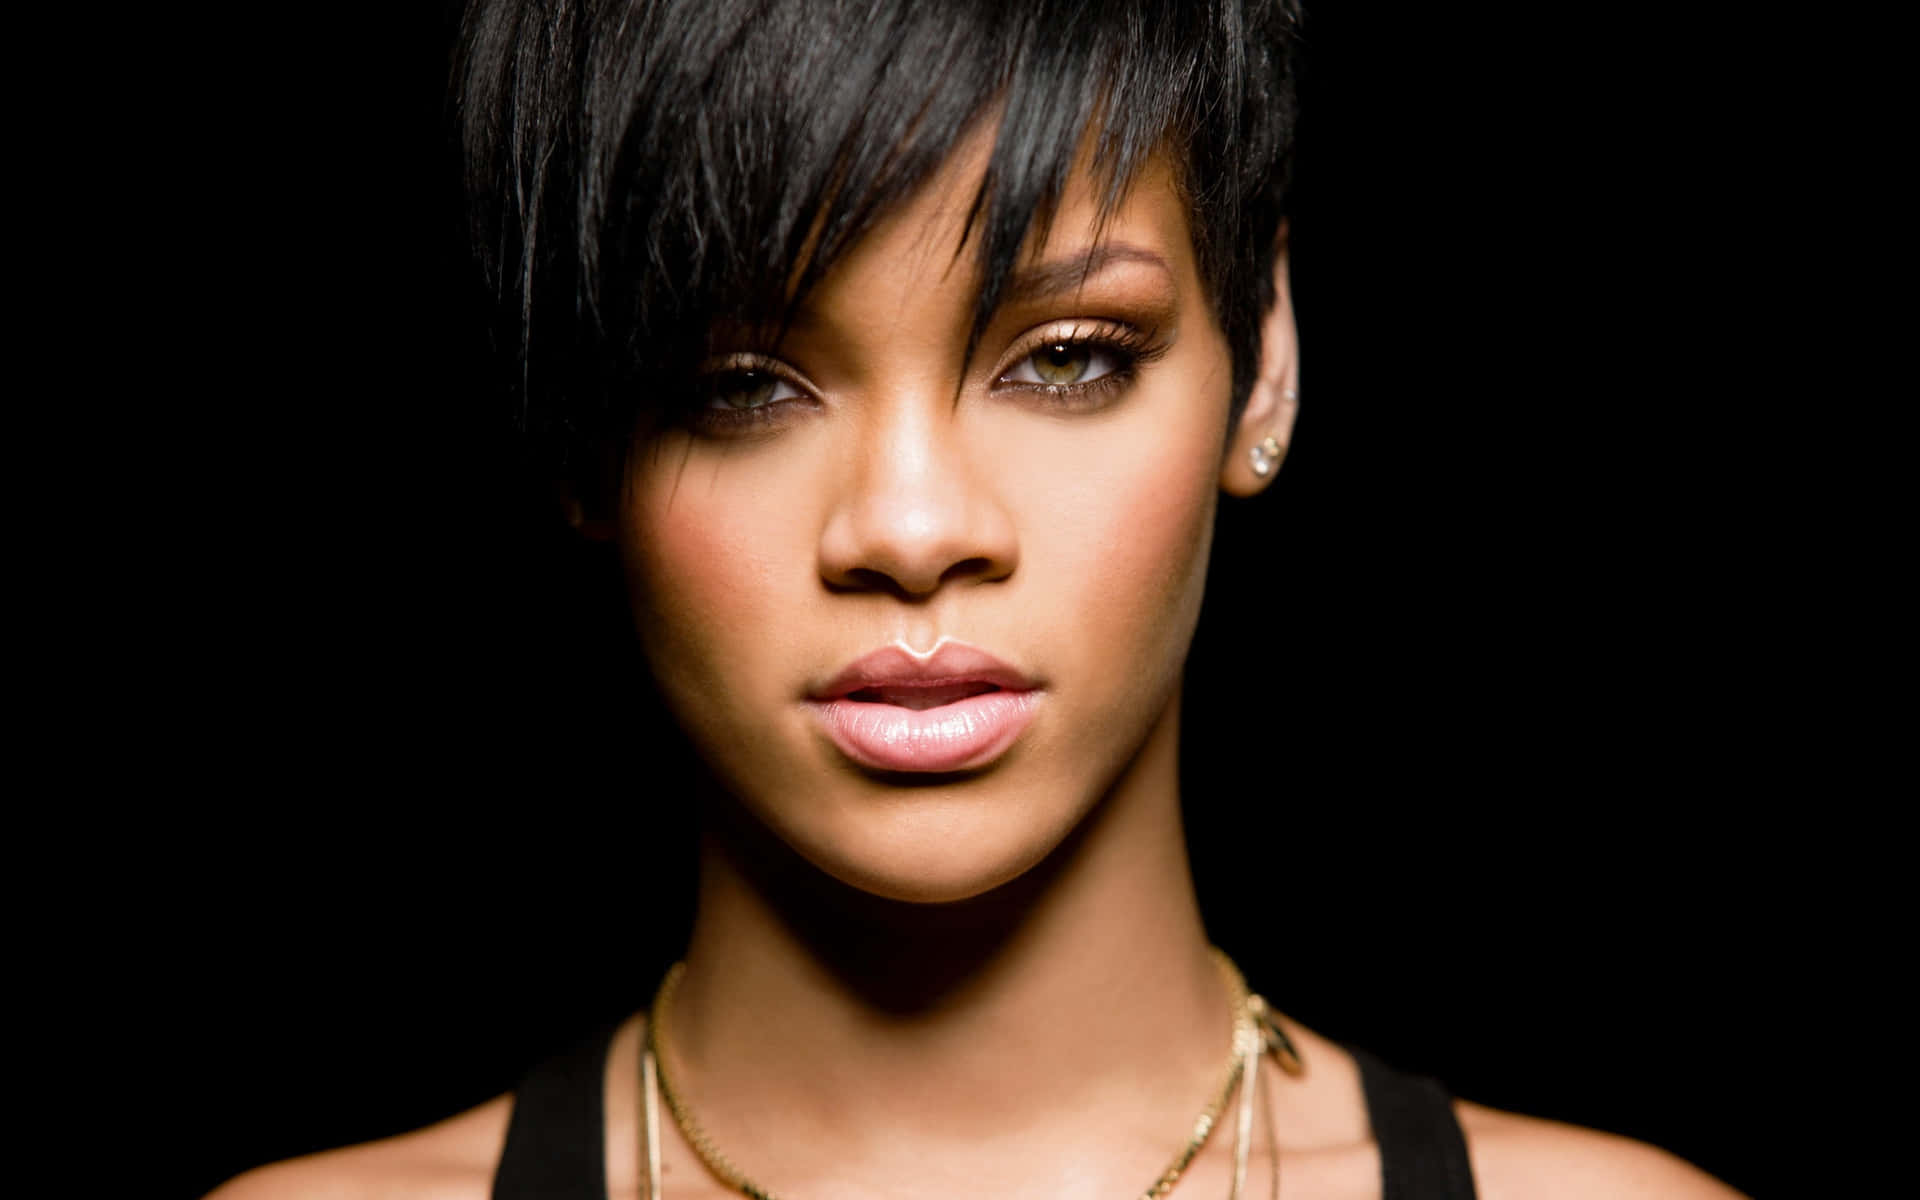 Singer, Rihanna, enjoying the good life